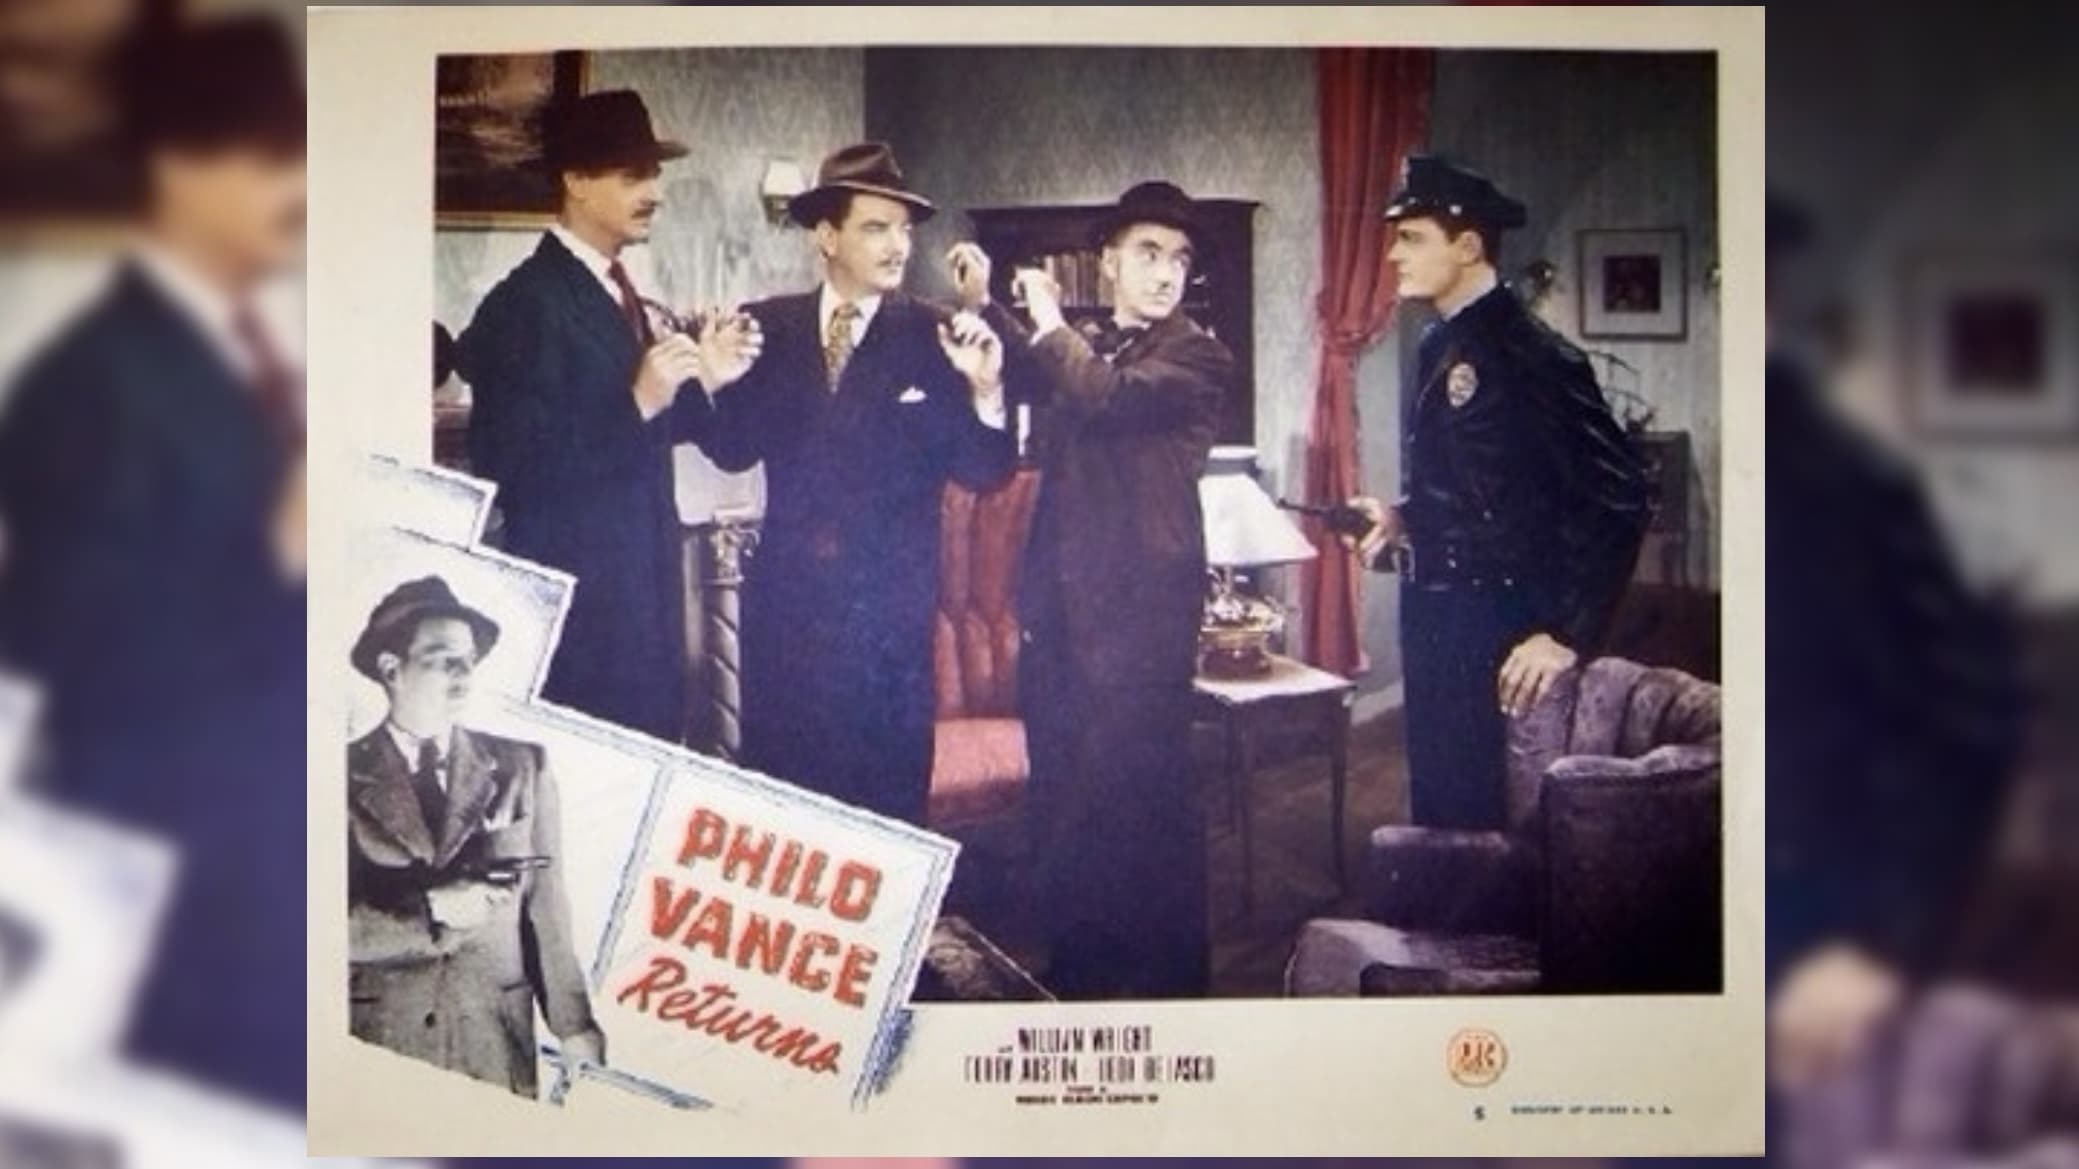 Philo Vance Returns (1947)